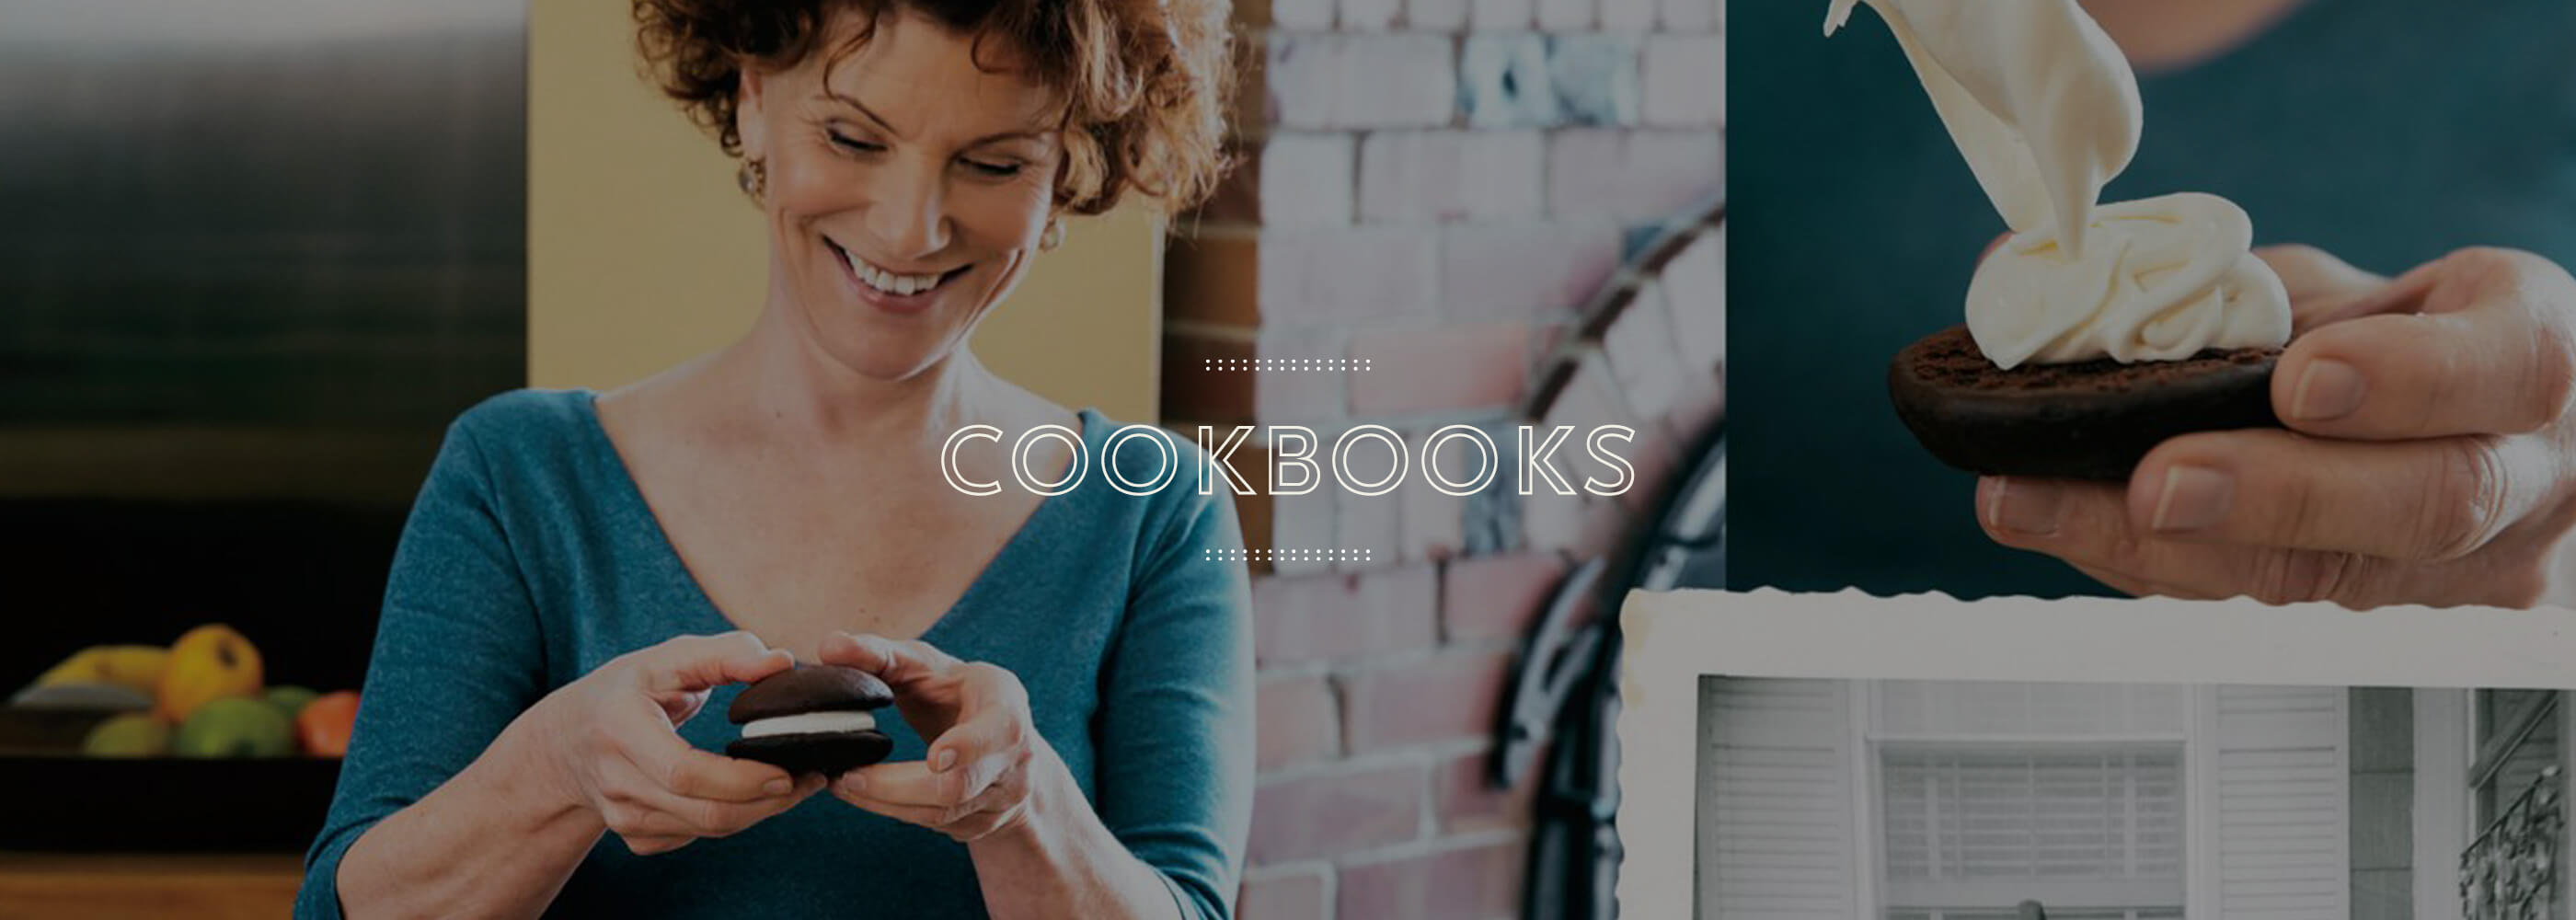 Joanne Weir's Cookbooks